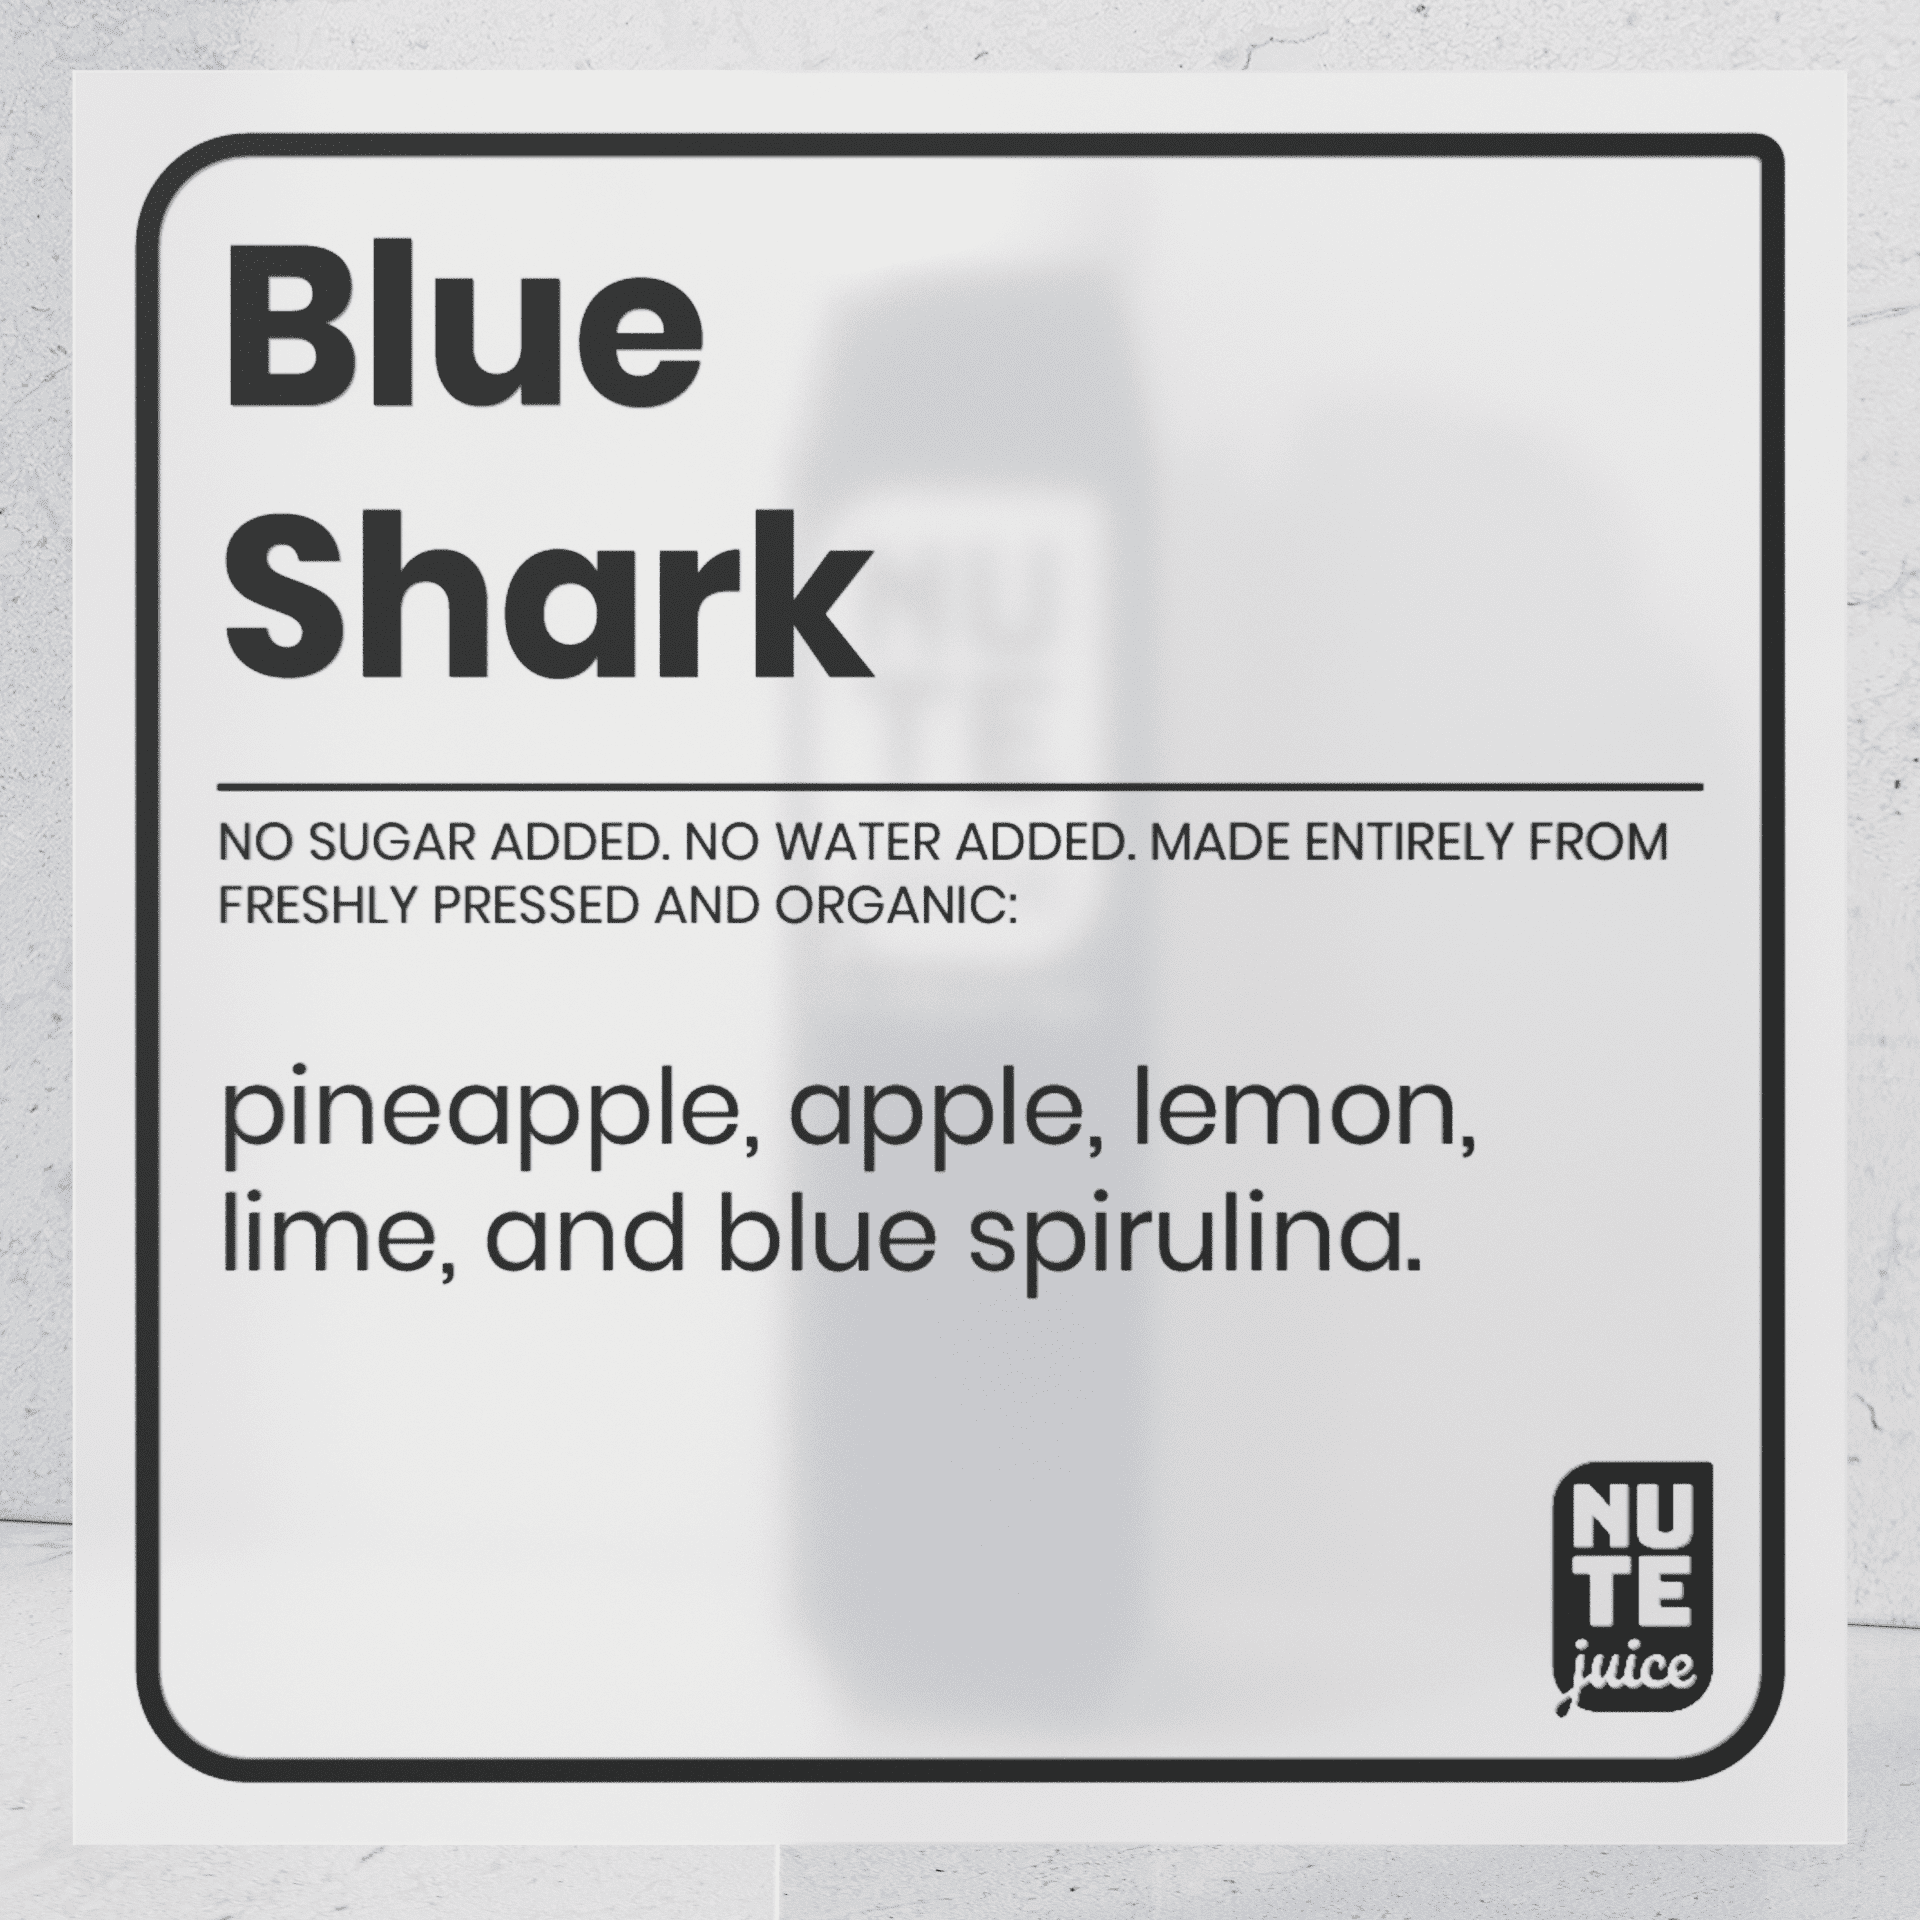 Blue shark ingredients